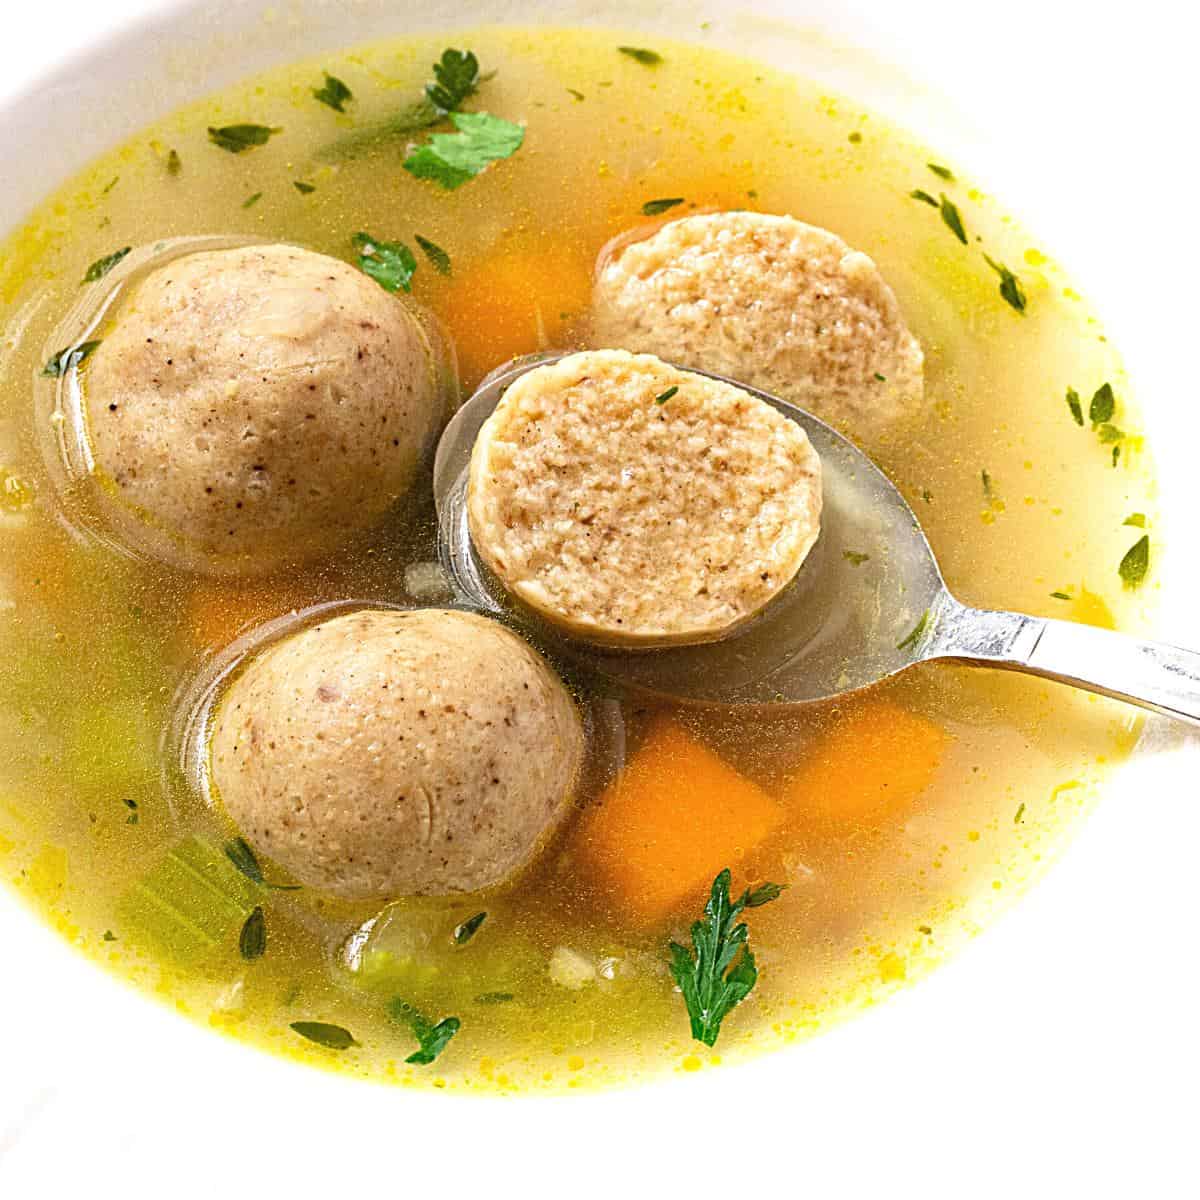 A bowl with matzo ball soup.